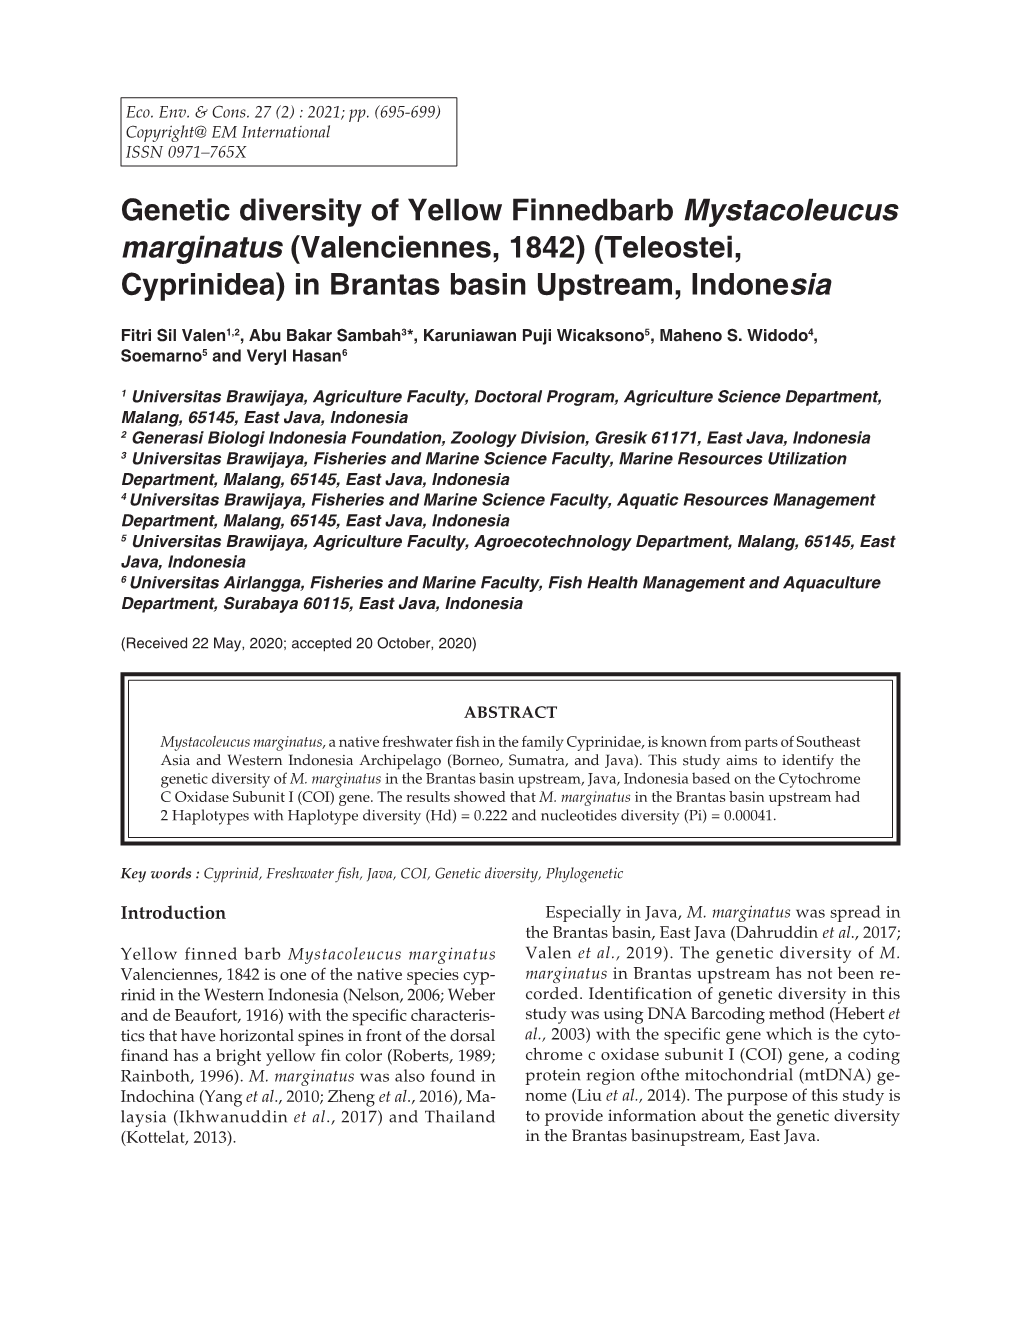 Genetic Diversity of Yellow Finnedbarb Mystacoleucus Marginatus (Valenciennes, 1842) (Teleostei, Cyprinidea) in Brantas Basin Upstream, Indonesia